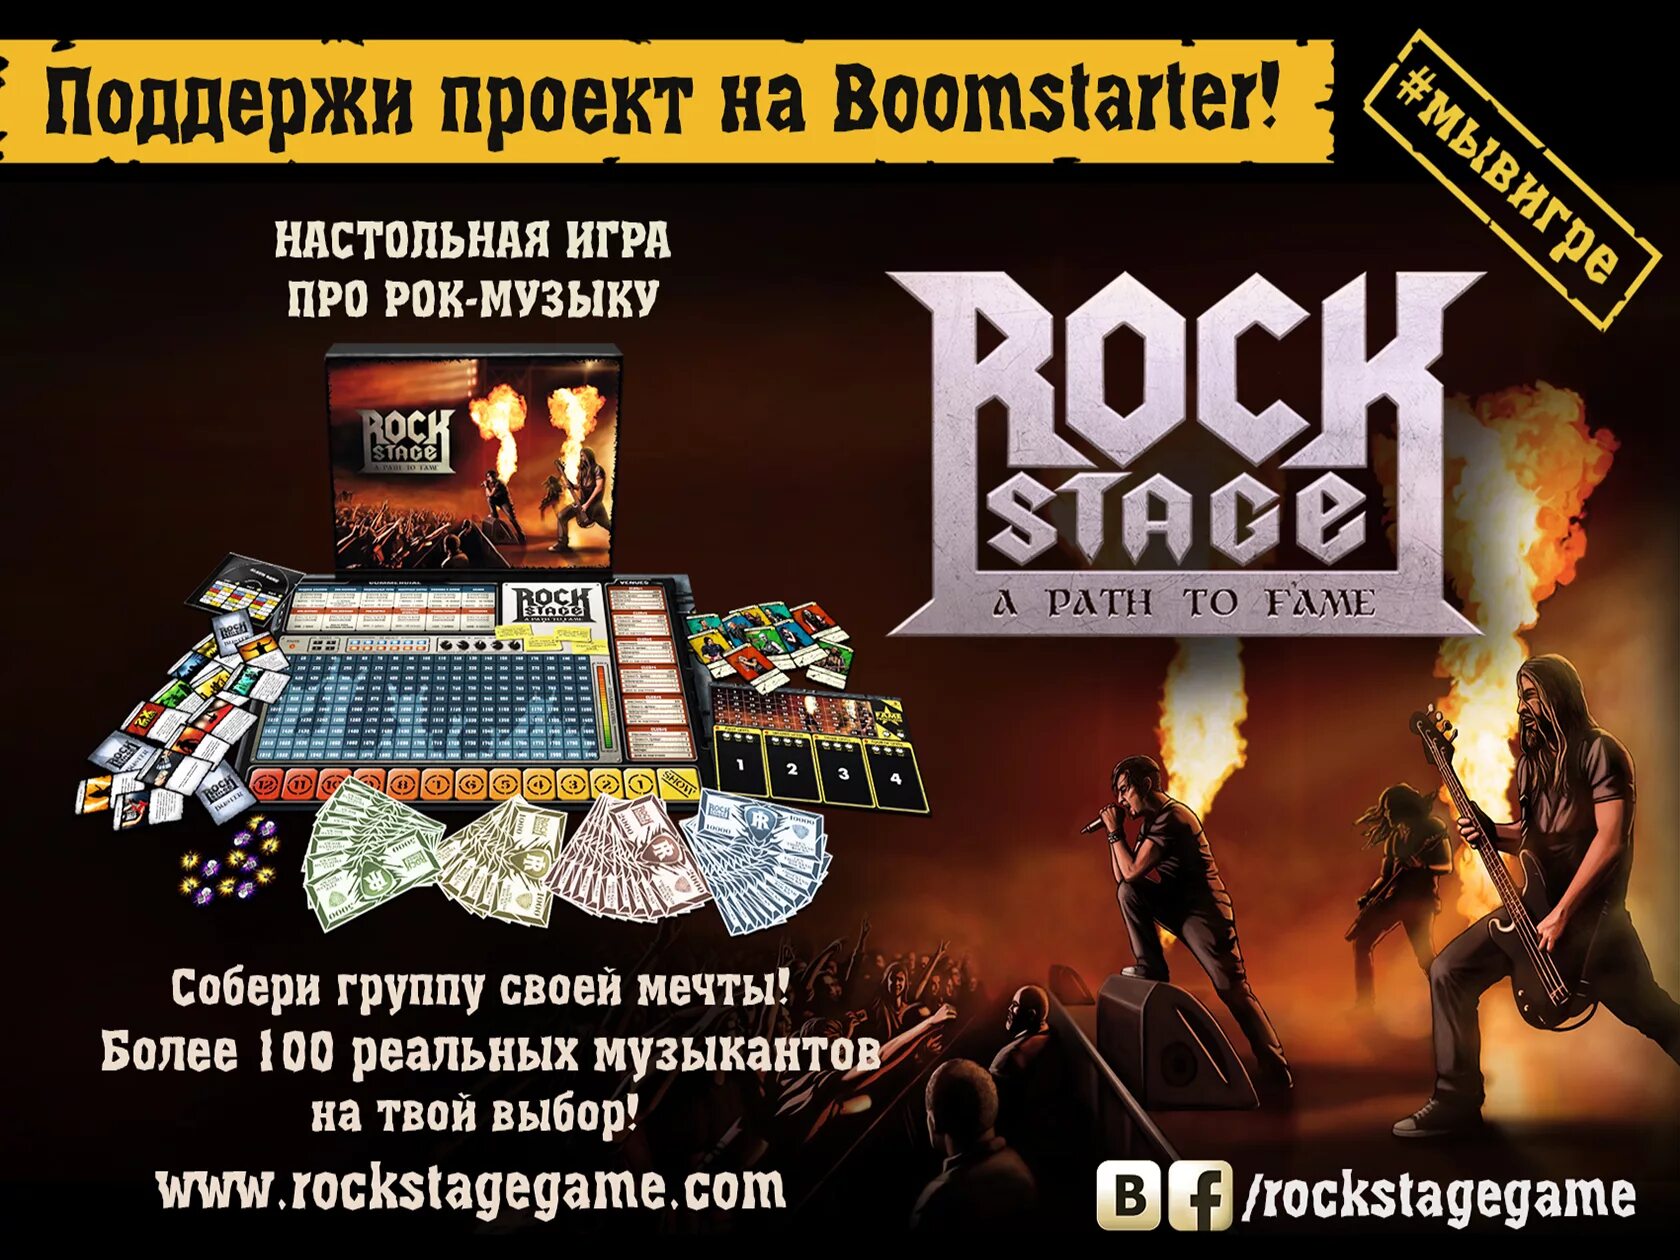 Rock Stage: а Path to Fame. Rock Stage игра. Настольная игра Rock Stage: а Path to Fame. Настольная игра для музыкантов. Песня игра рок